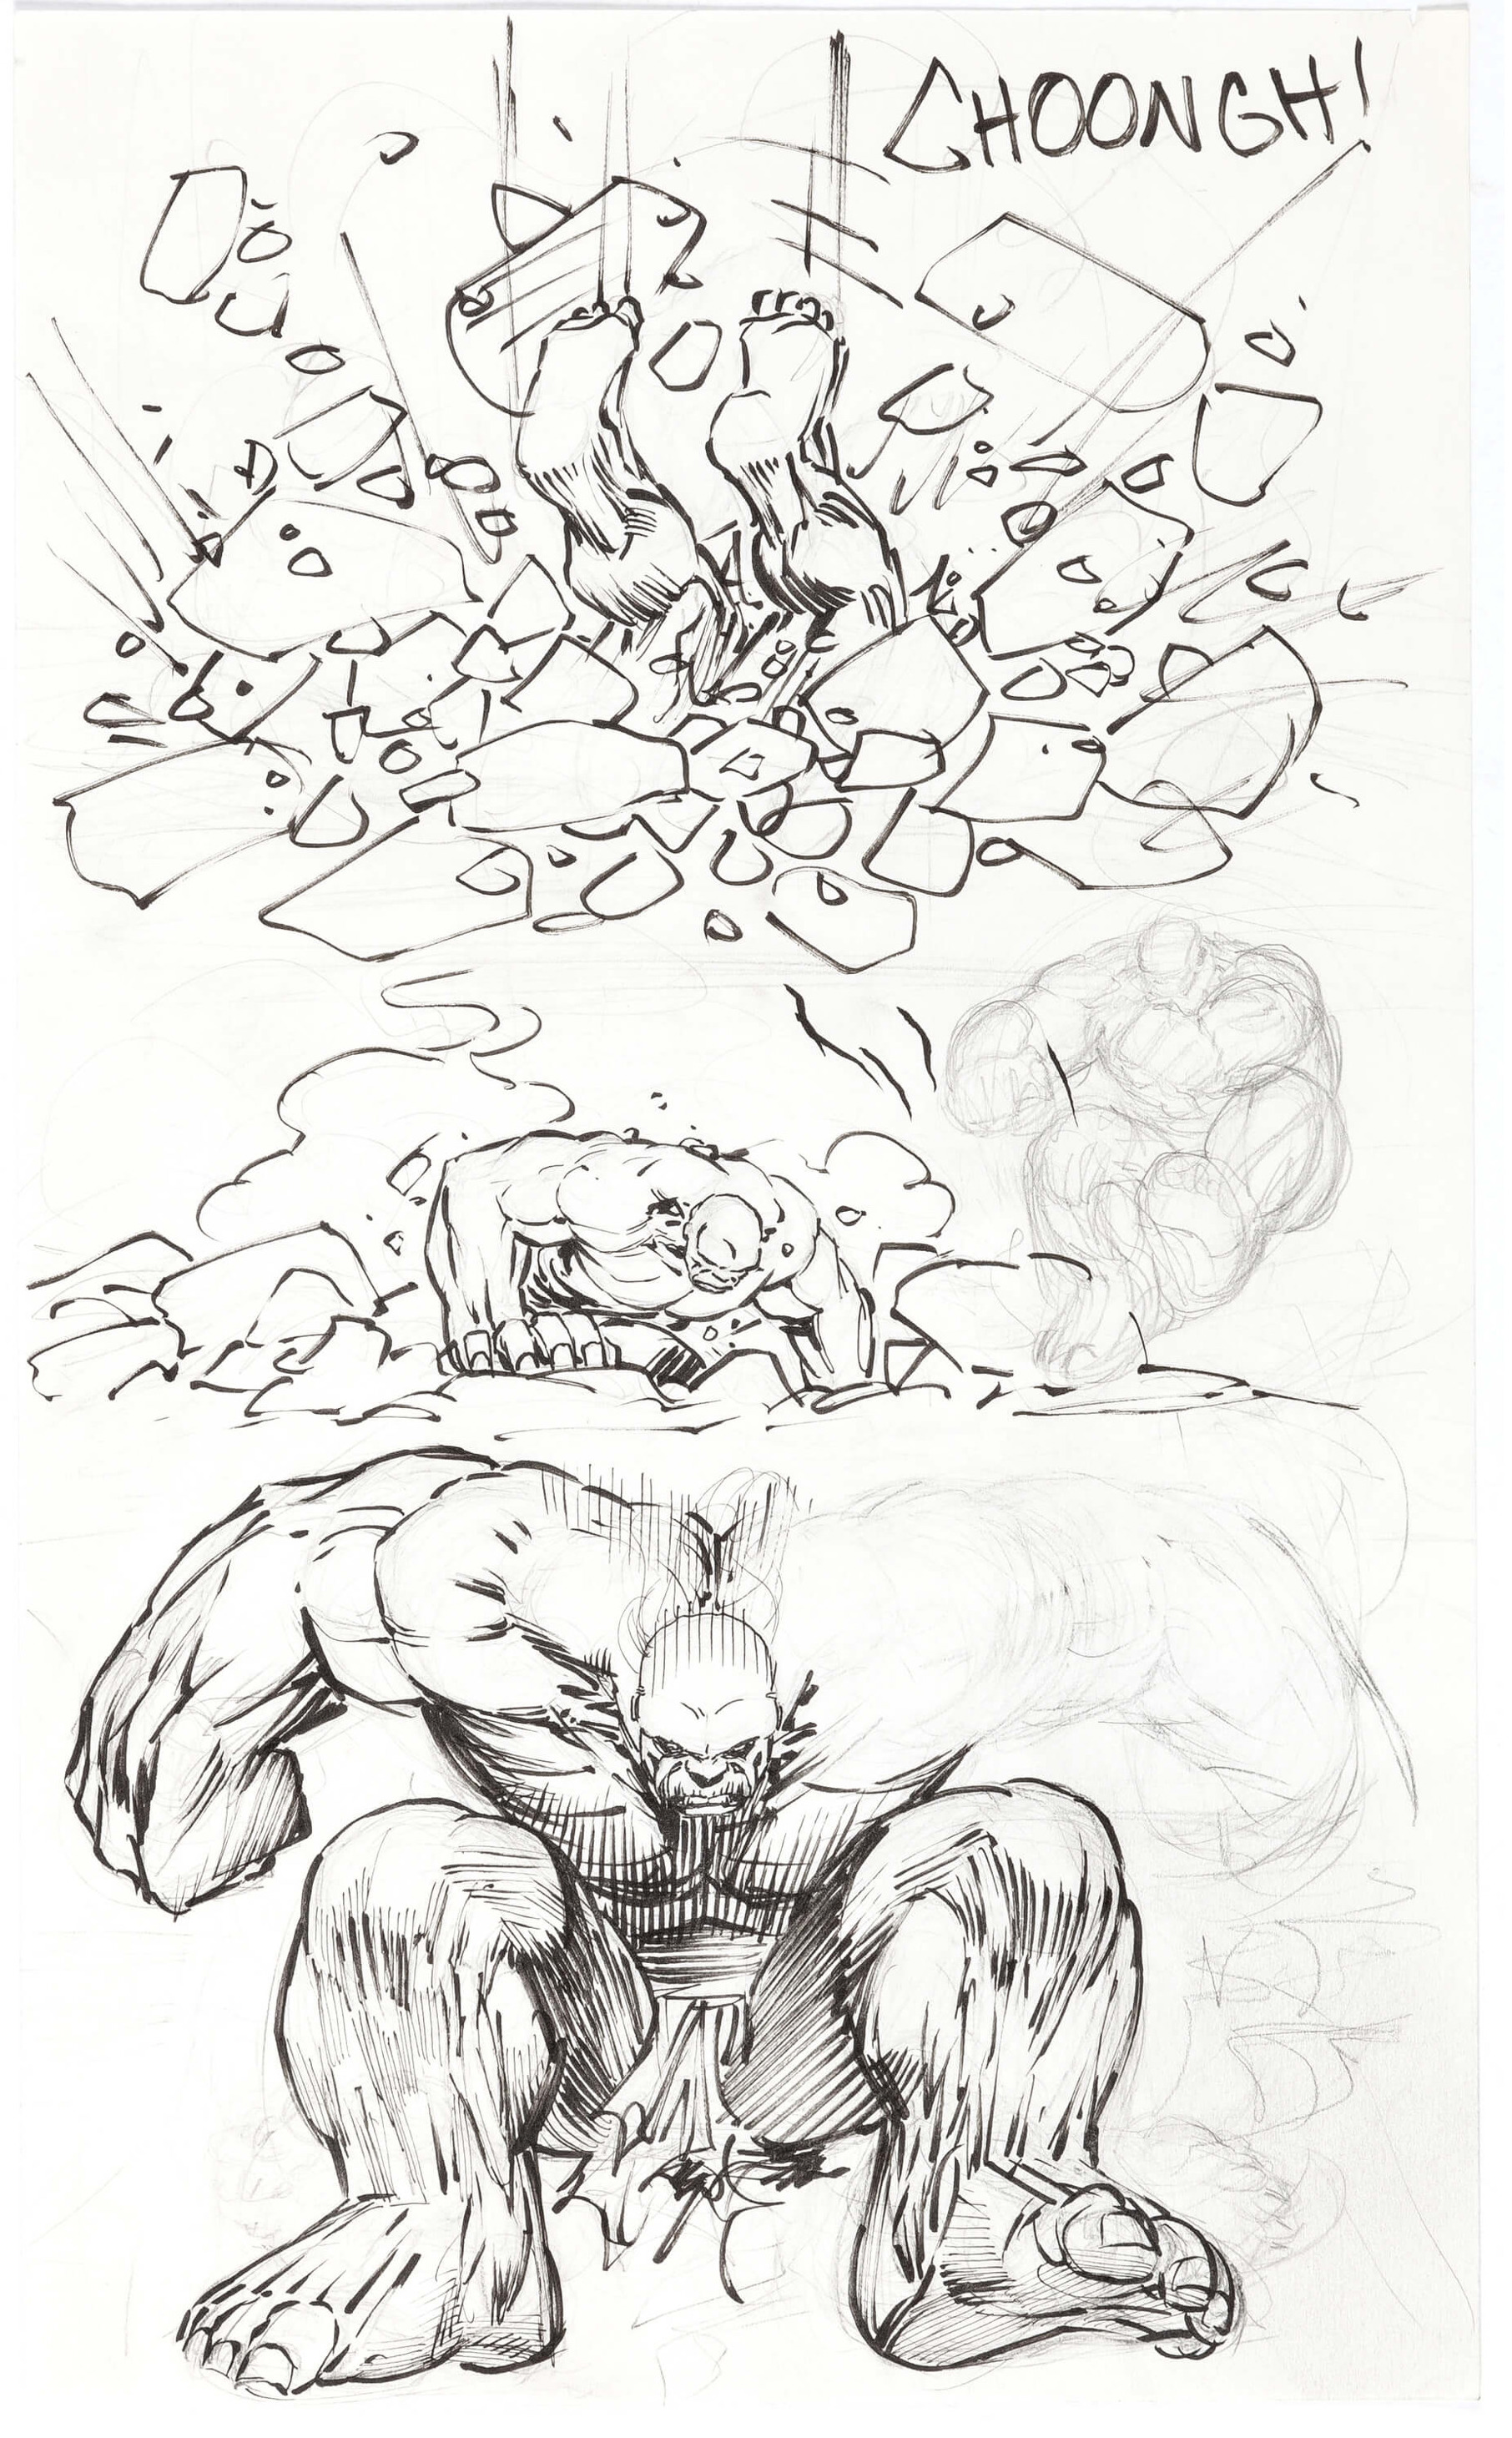 Dale Keown Incredible Hulk sketches